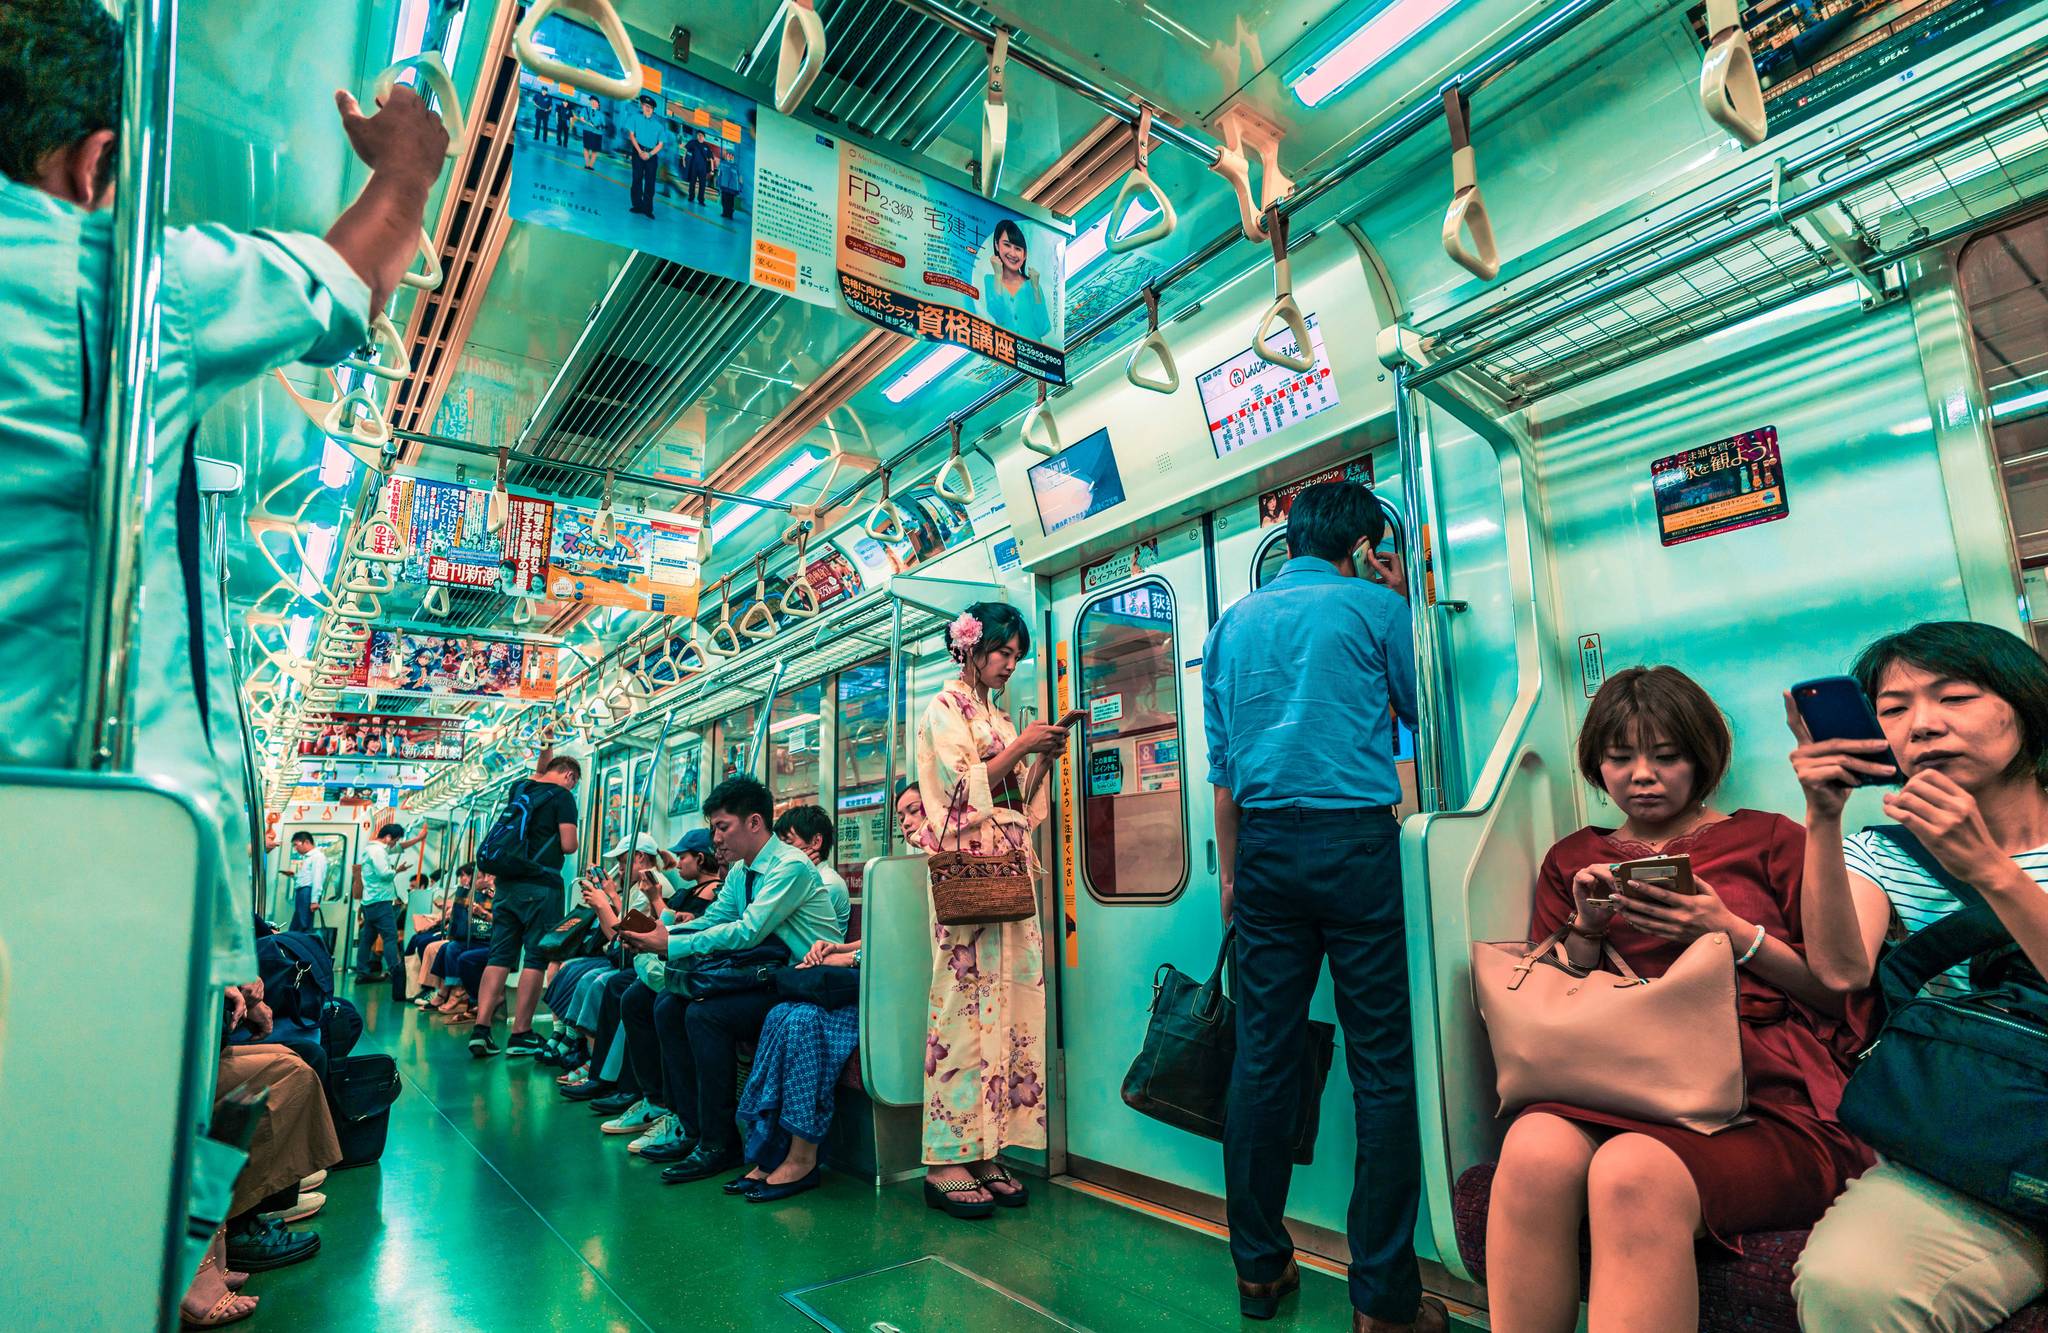 Free food incentive targets Tokyo's off-peak commuters